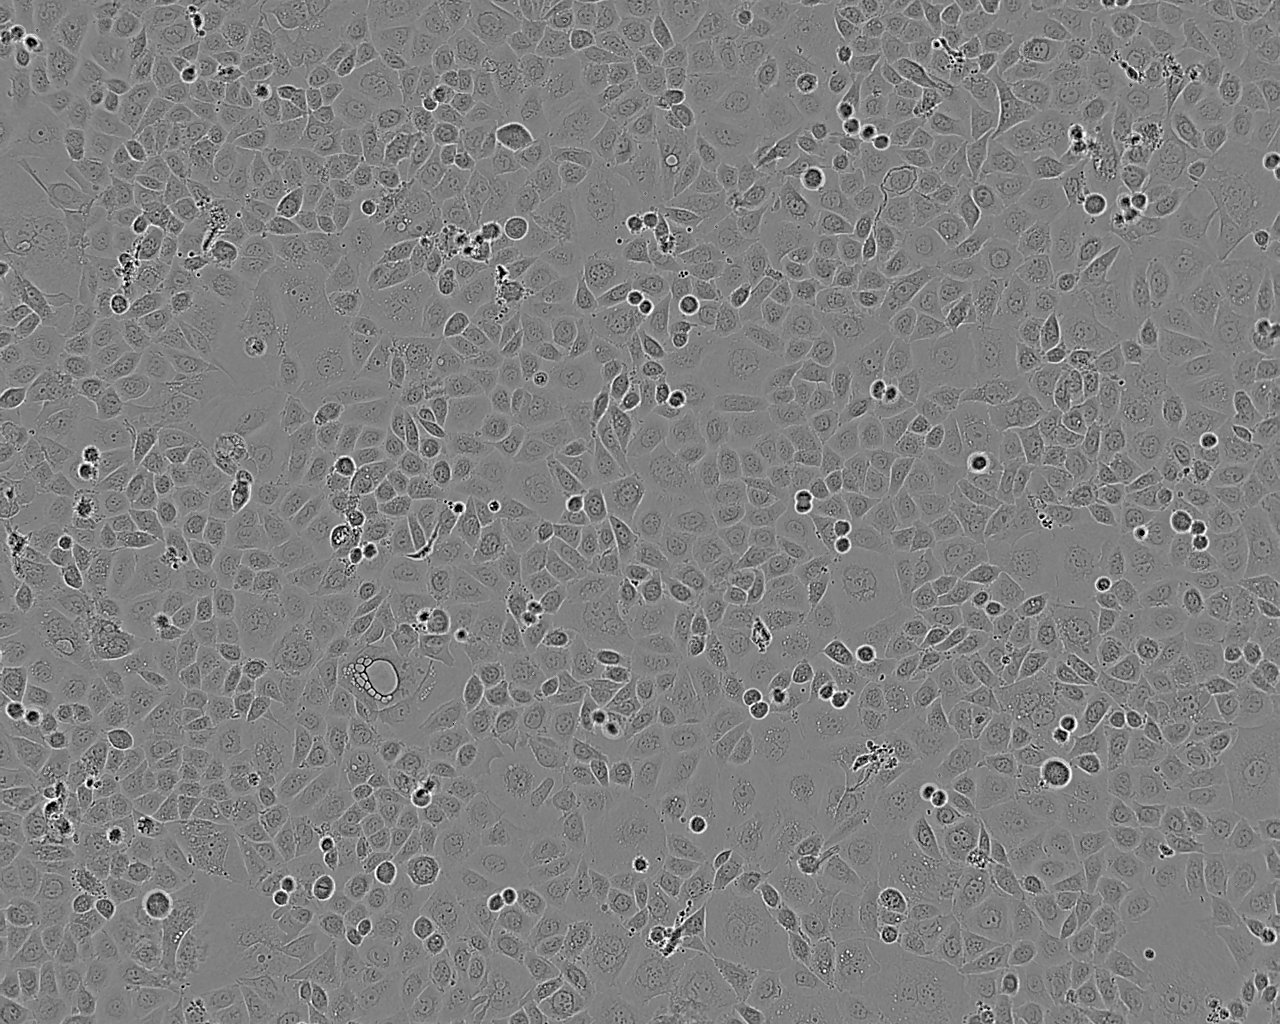 NCI-H1781 Cell:人支气管肺泡腺癌细胞系